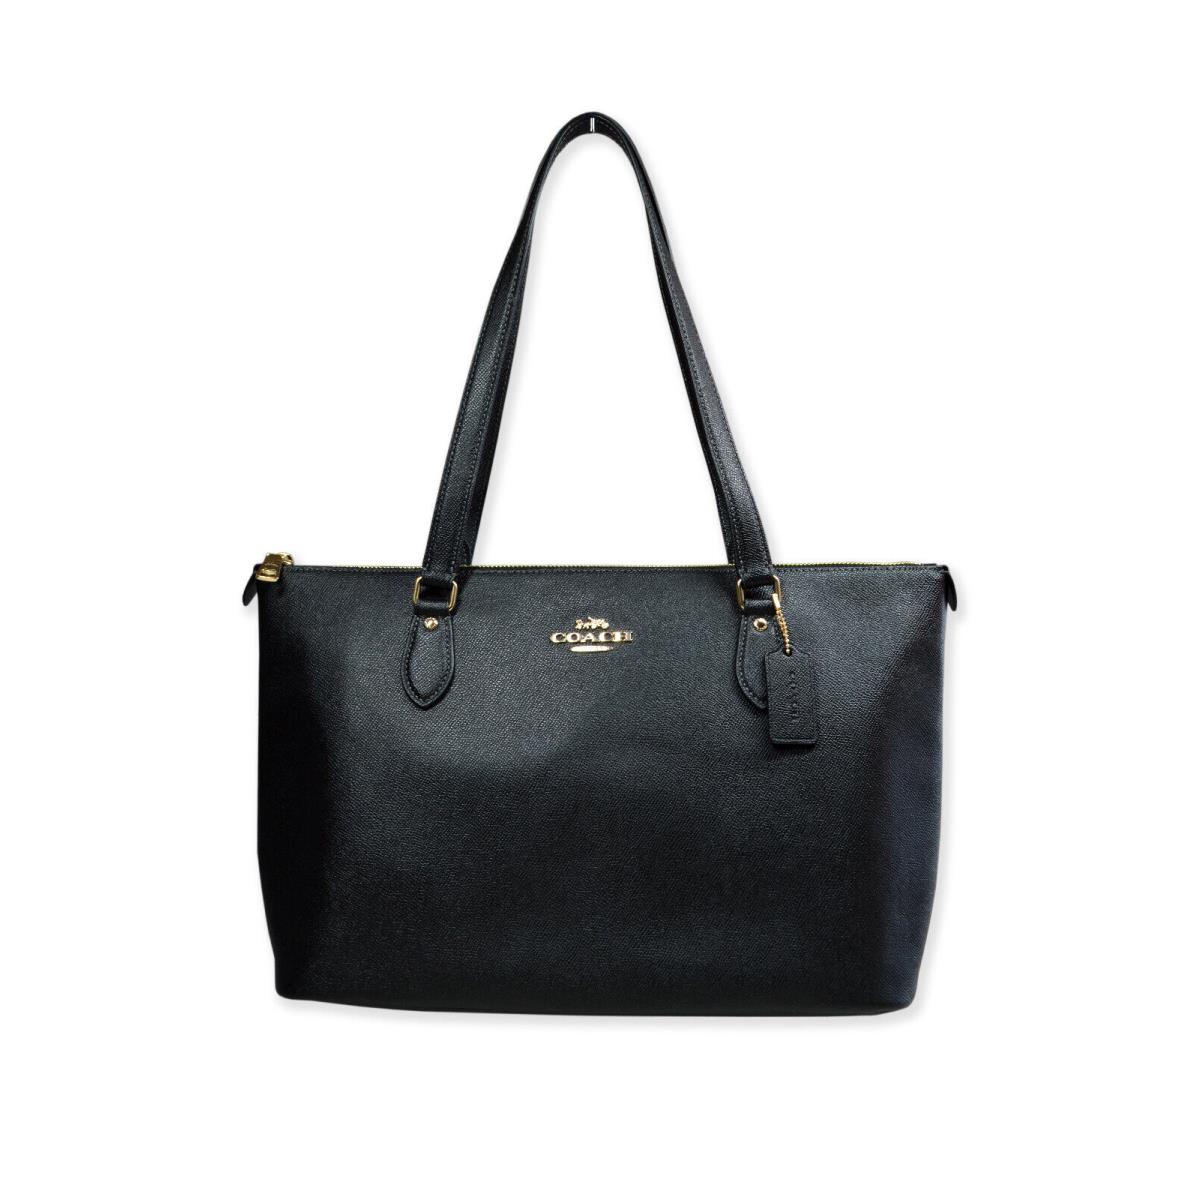 Coach  bag   - Brown Handle/Strap, Gold Hardware, Black Exterior 0